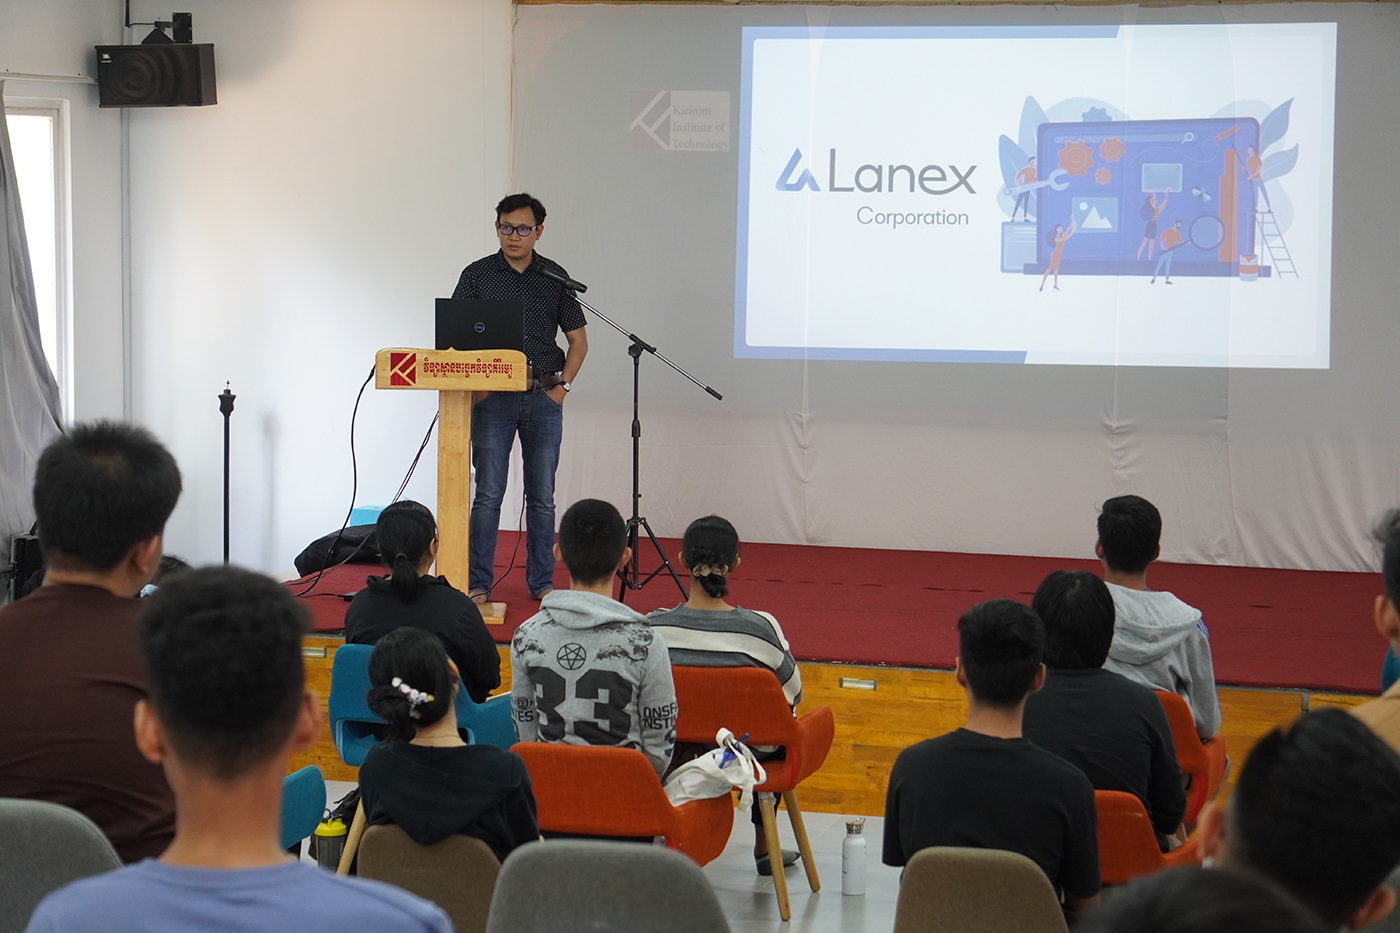 Lanex Corporation presentation